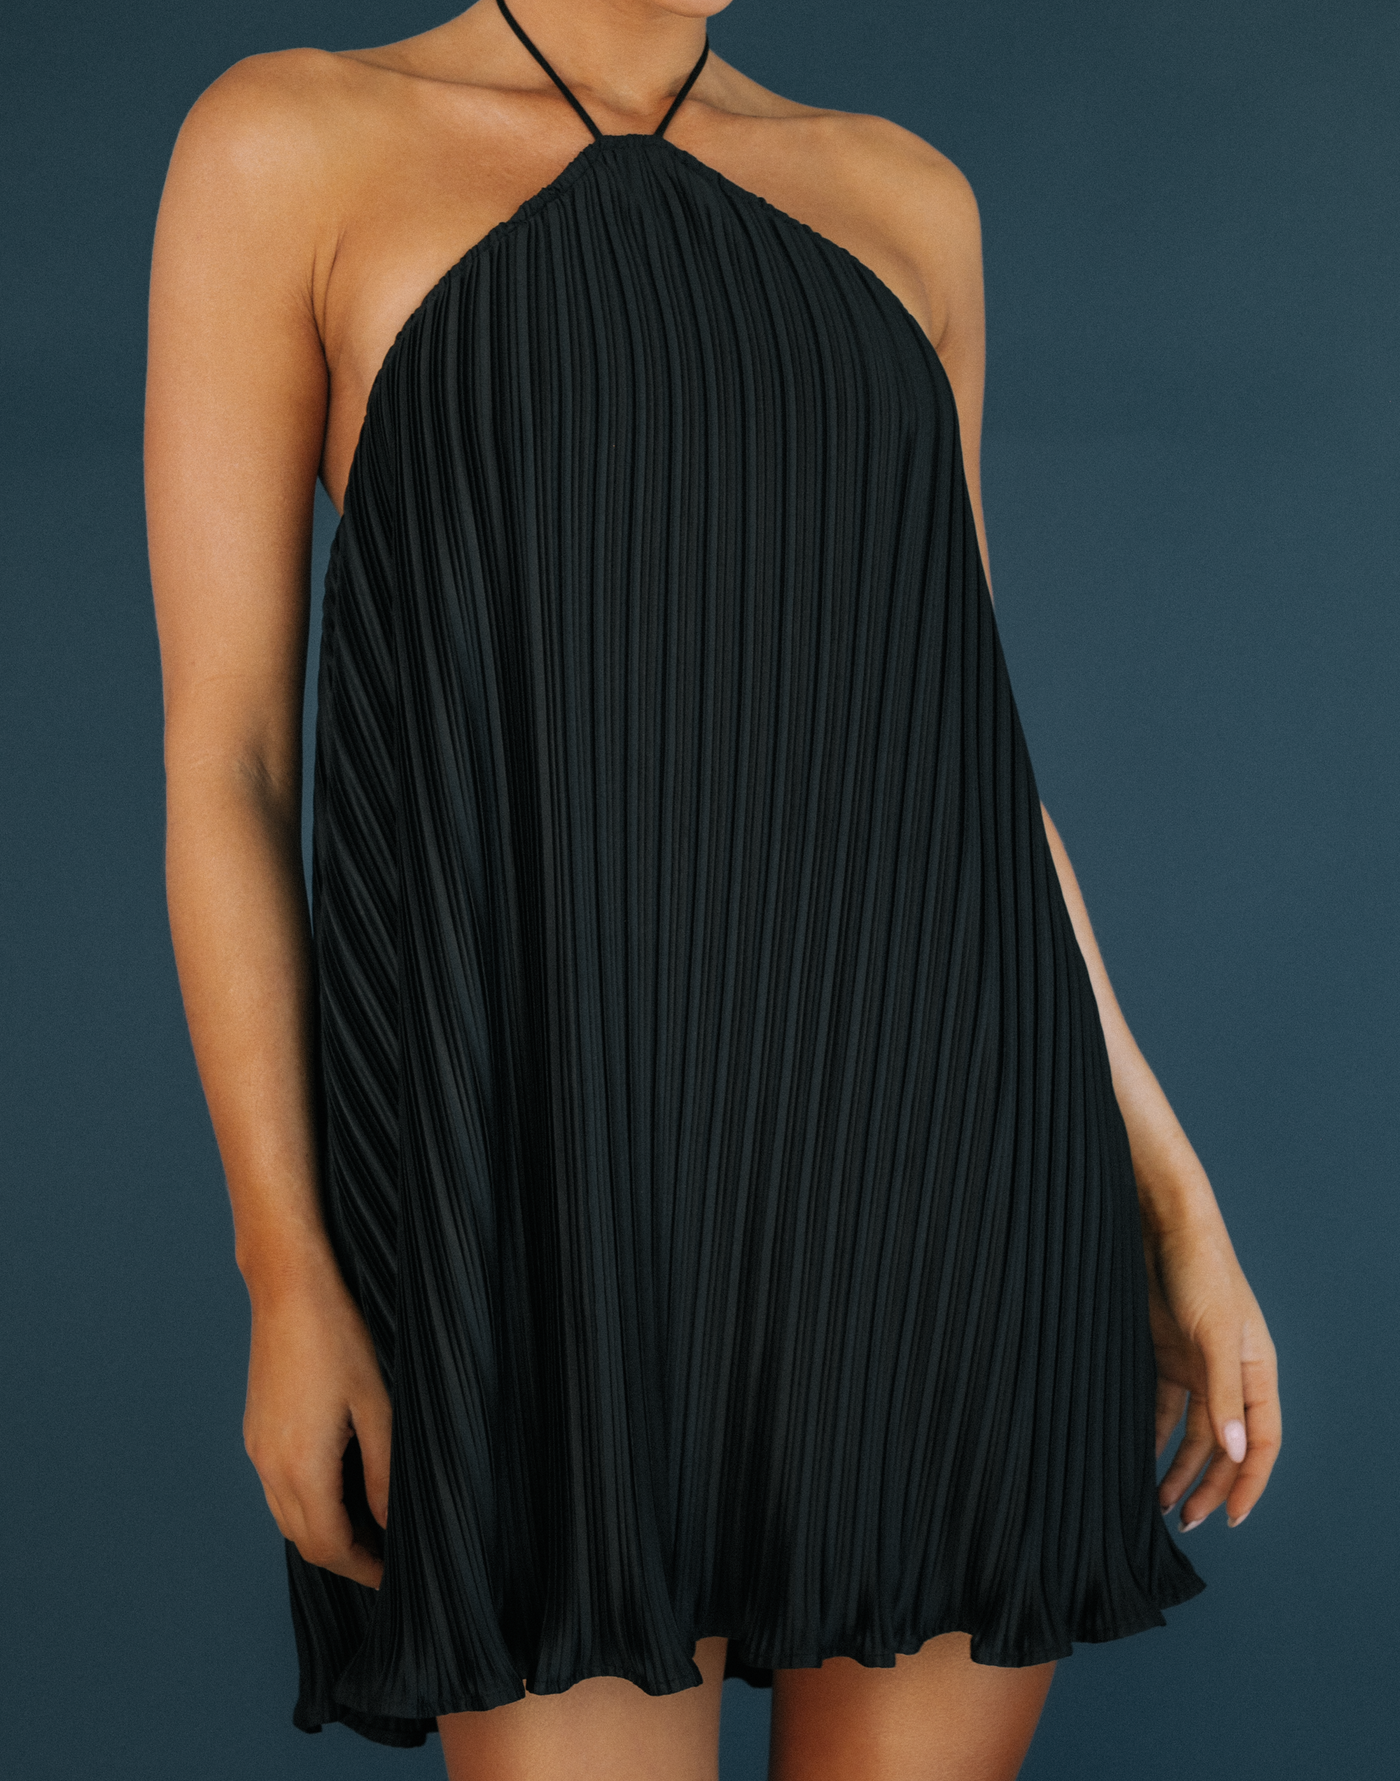 Spectre Halter Mini Dress (Black) - White Halter Mni Dress - Women's Dress - Charcoal Clothing